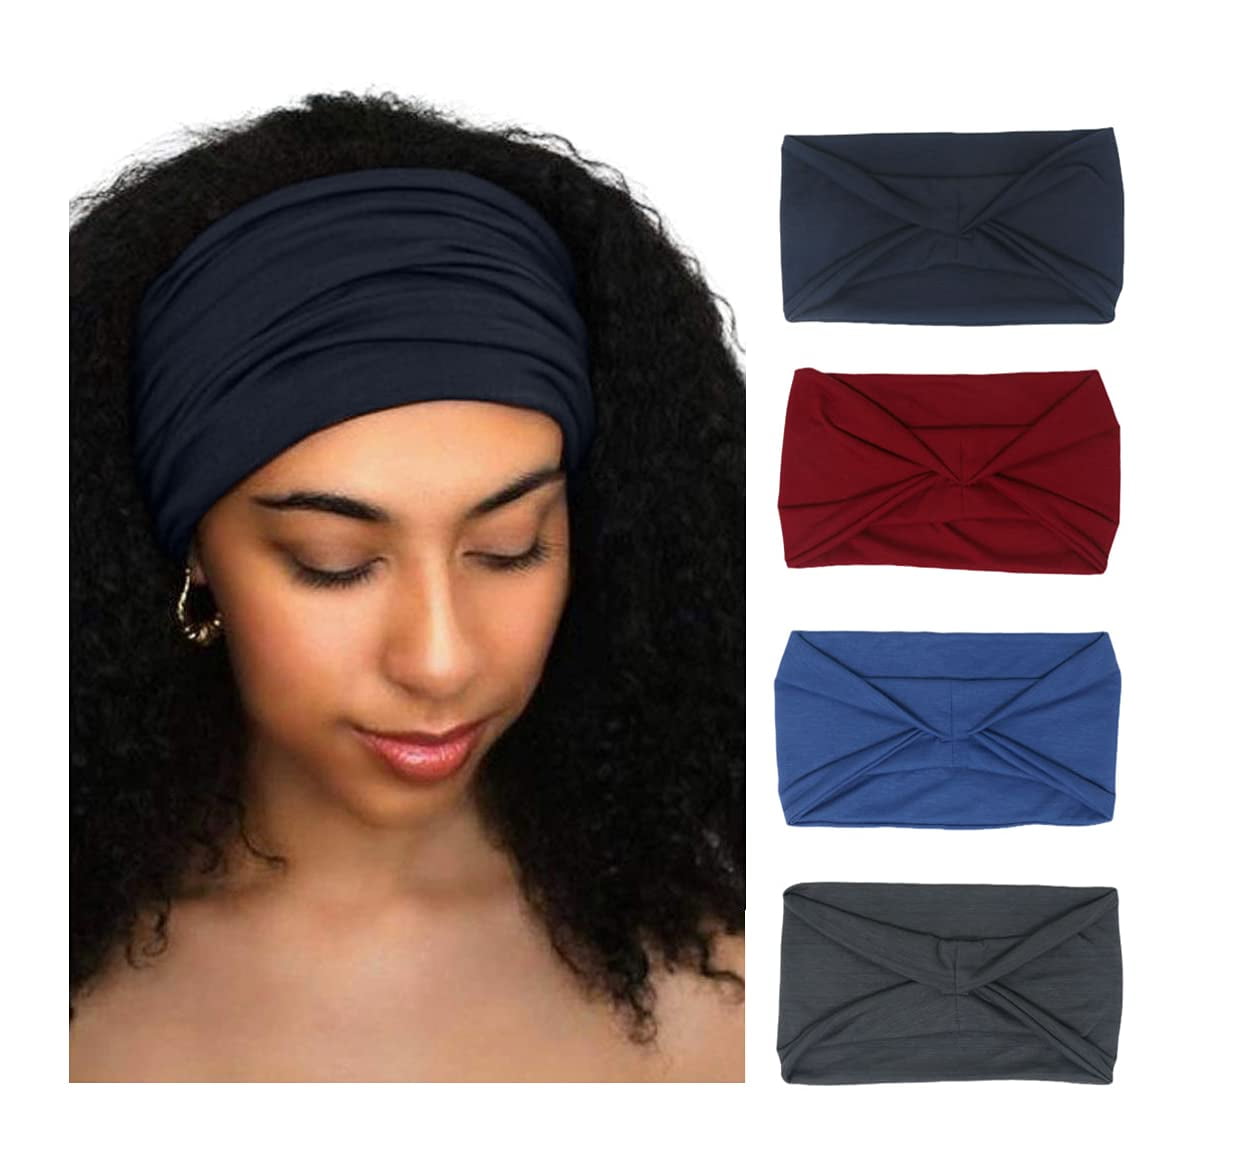 Wide 4 inch Black Hairband head band wrap headband 